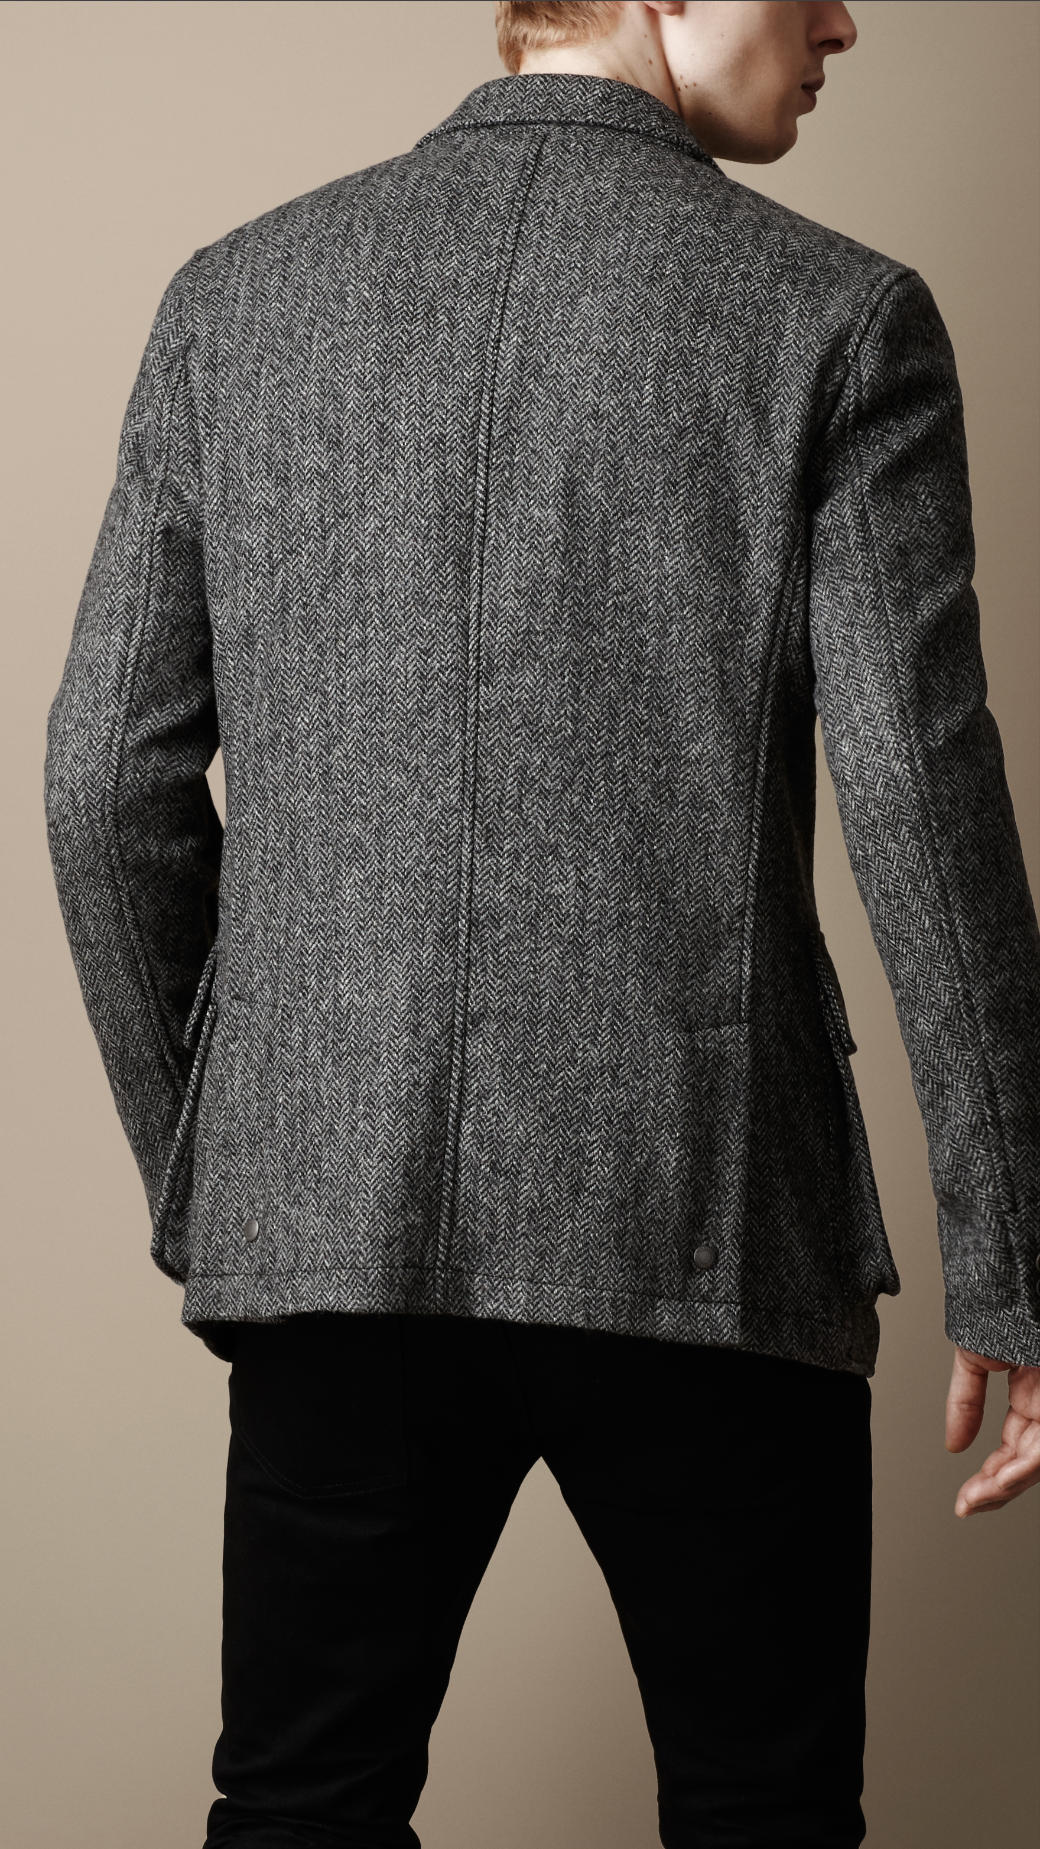 Lyst - Burberry Herringbone Tweed Jacket in Gray for Men